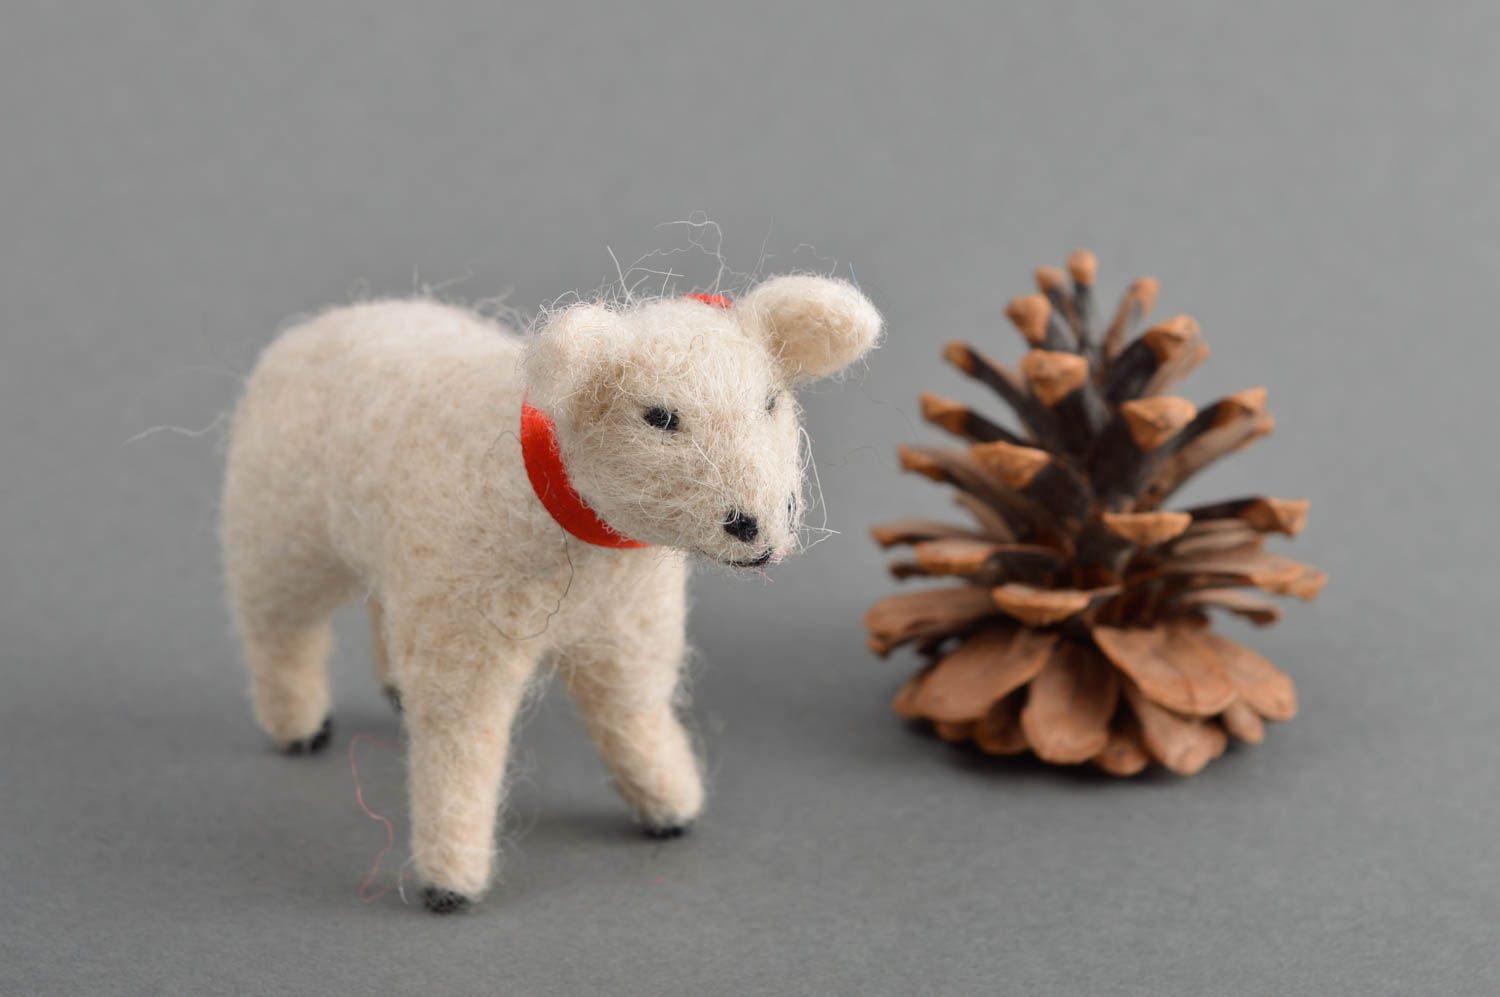 Handmade toy woolen toy for children interior decor ideas gift for baby photo 1